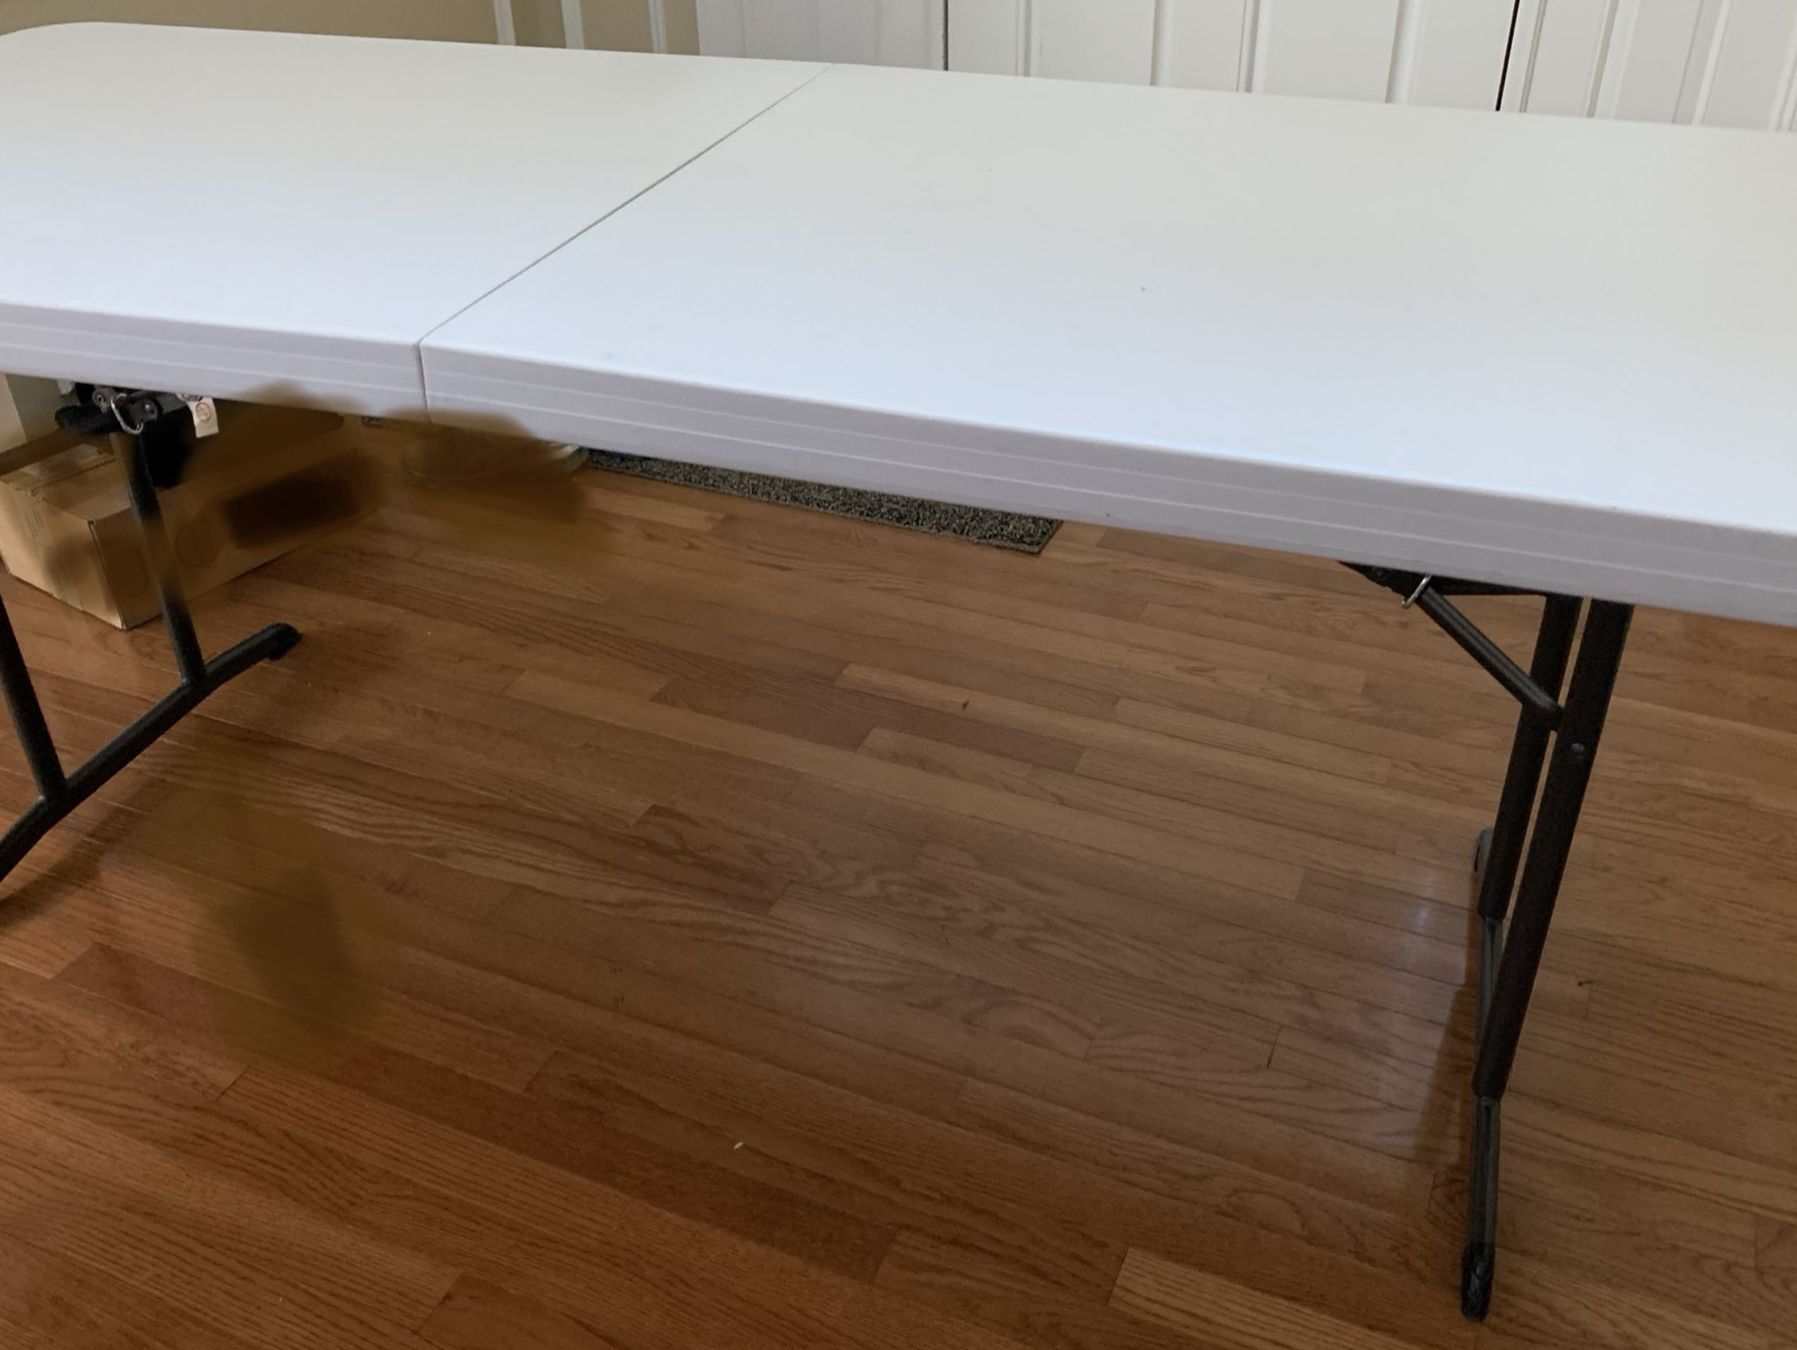 Brand new 6’ heavy duty portable folding table